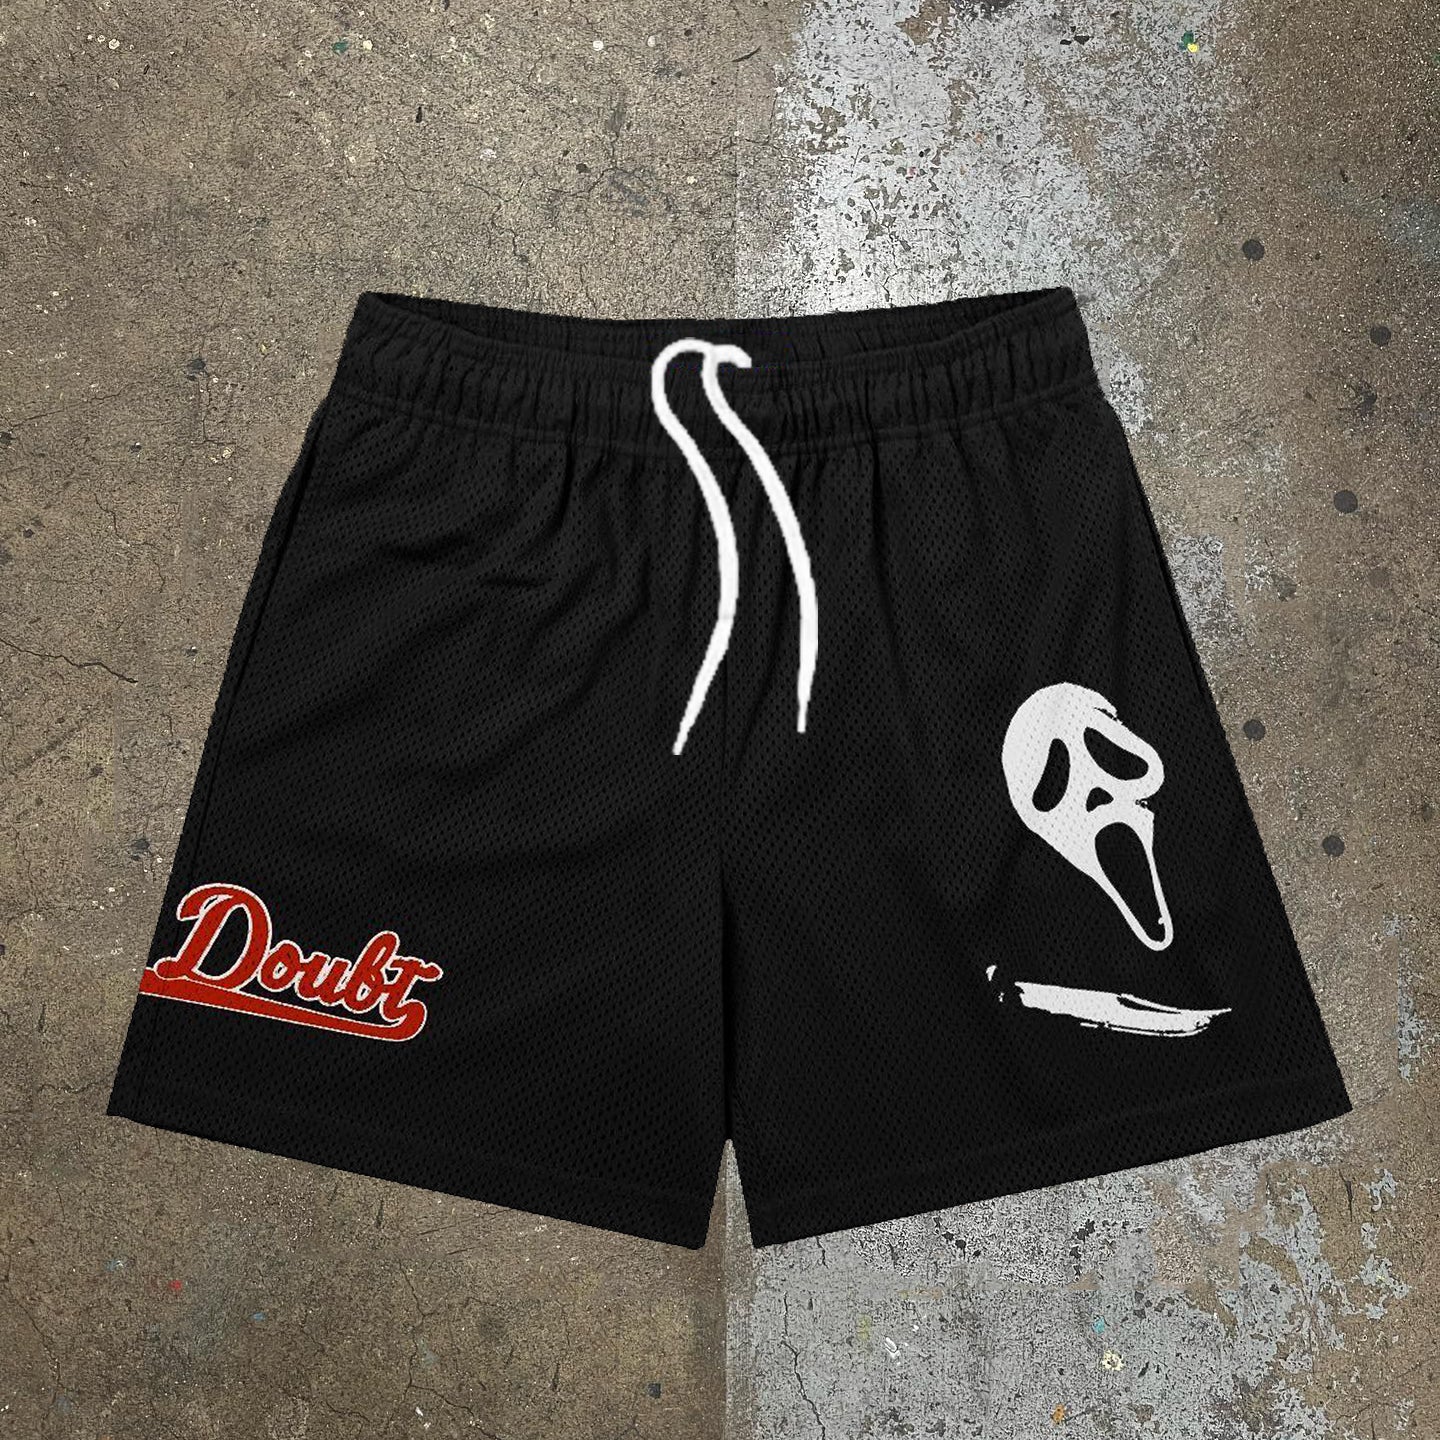 Doubt Scream Print Mesh Shorts